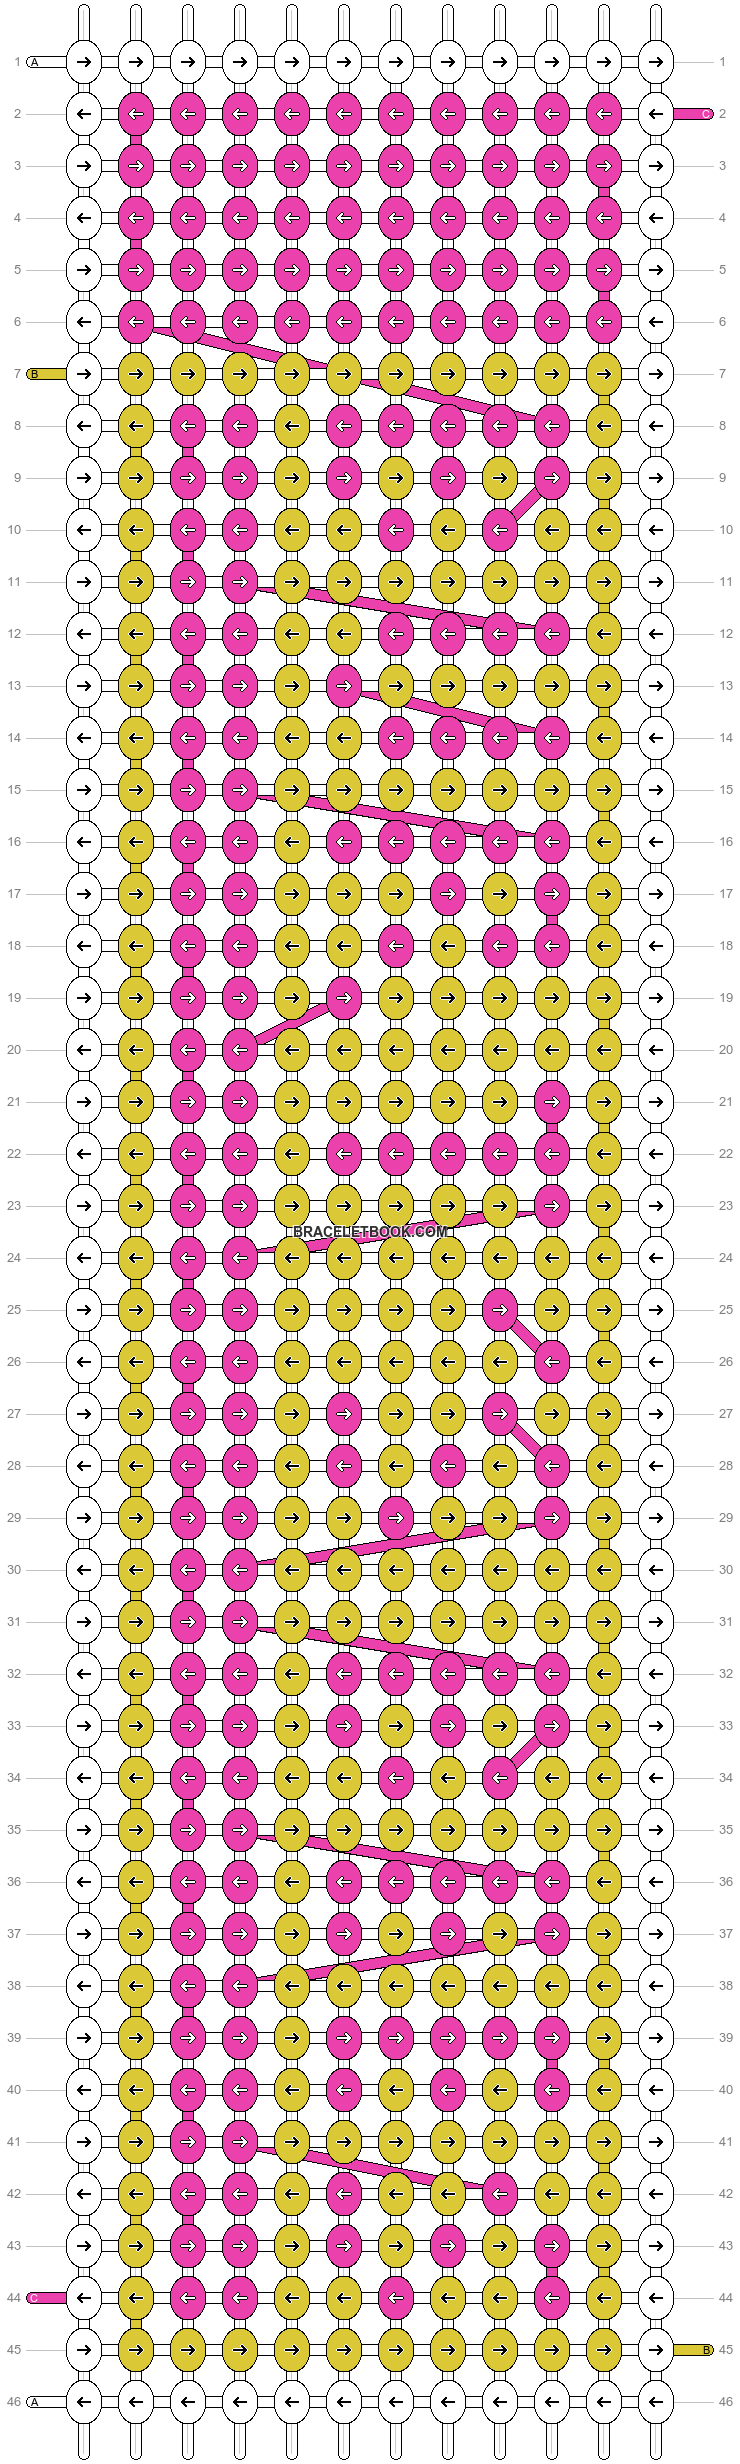 Alpha pattern #44350 variation #69131 pattern